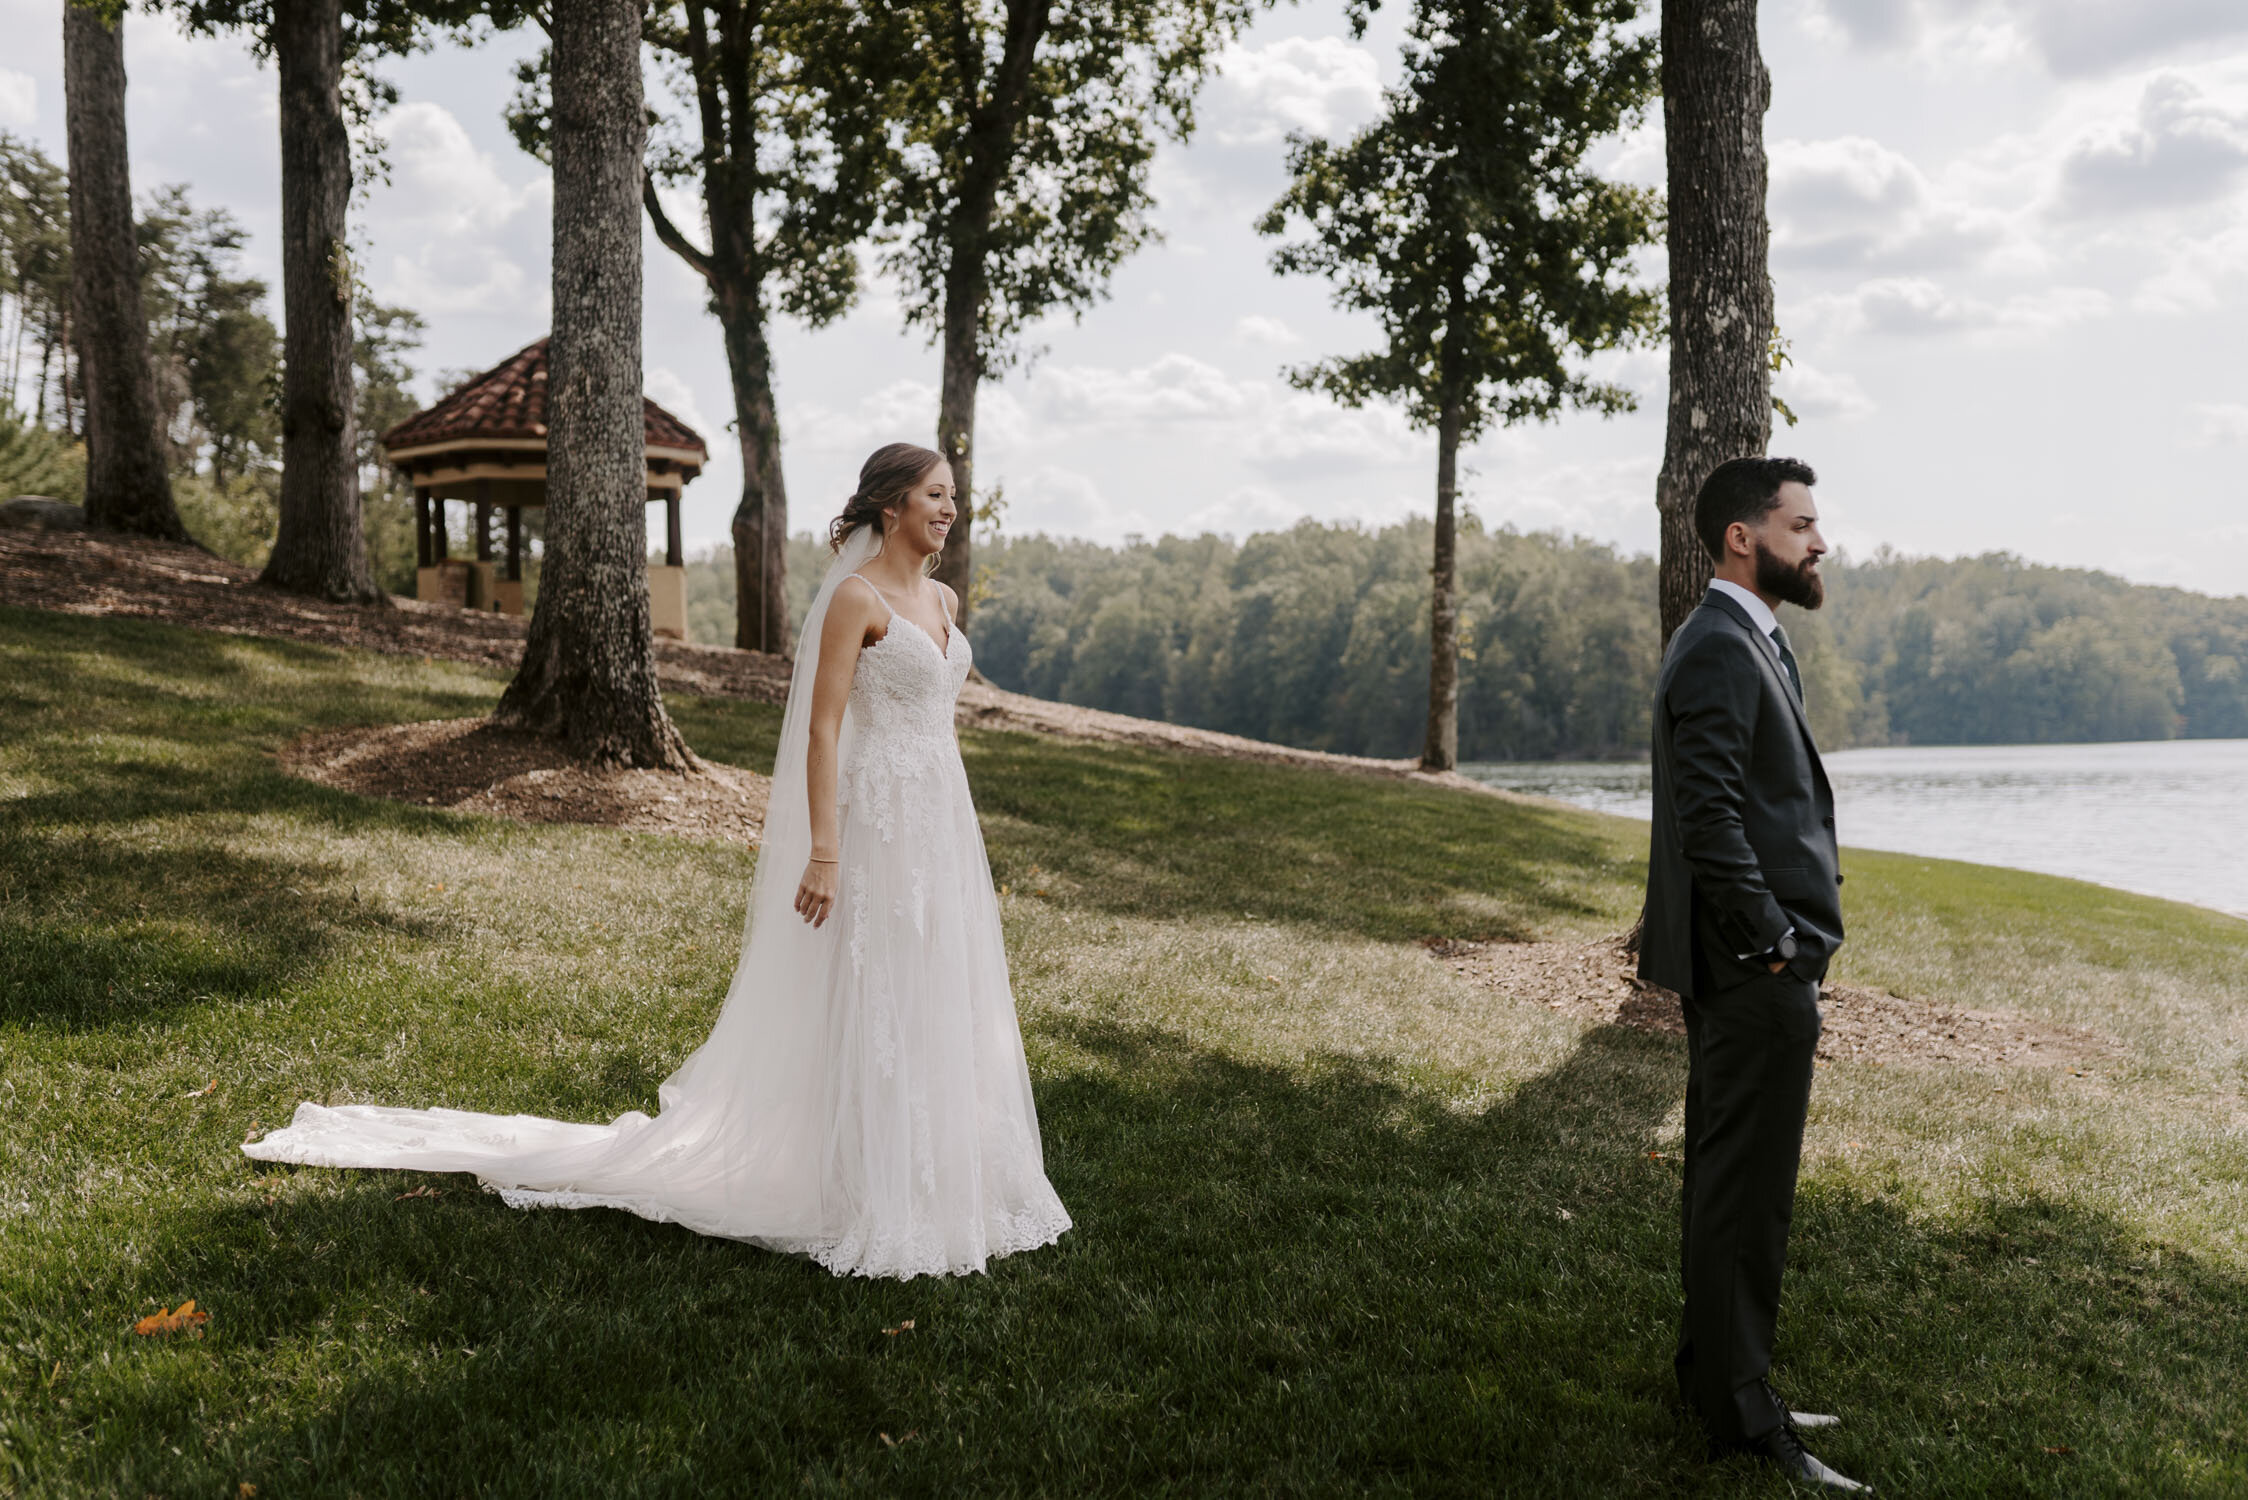 Romantic First Look at Bella Collina | By Greensboro, NC Wedding Photographer: Kayli LaFon Photography